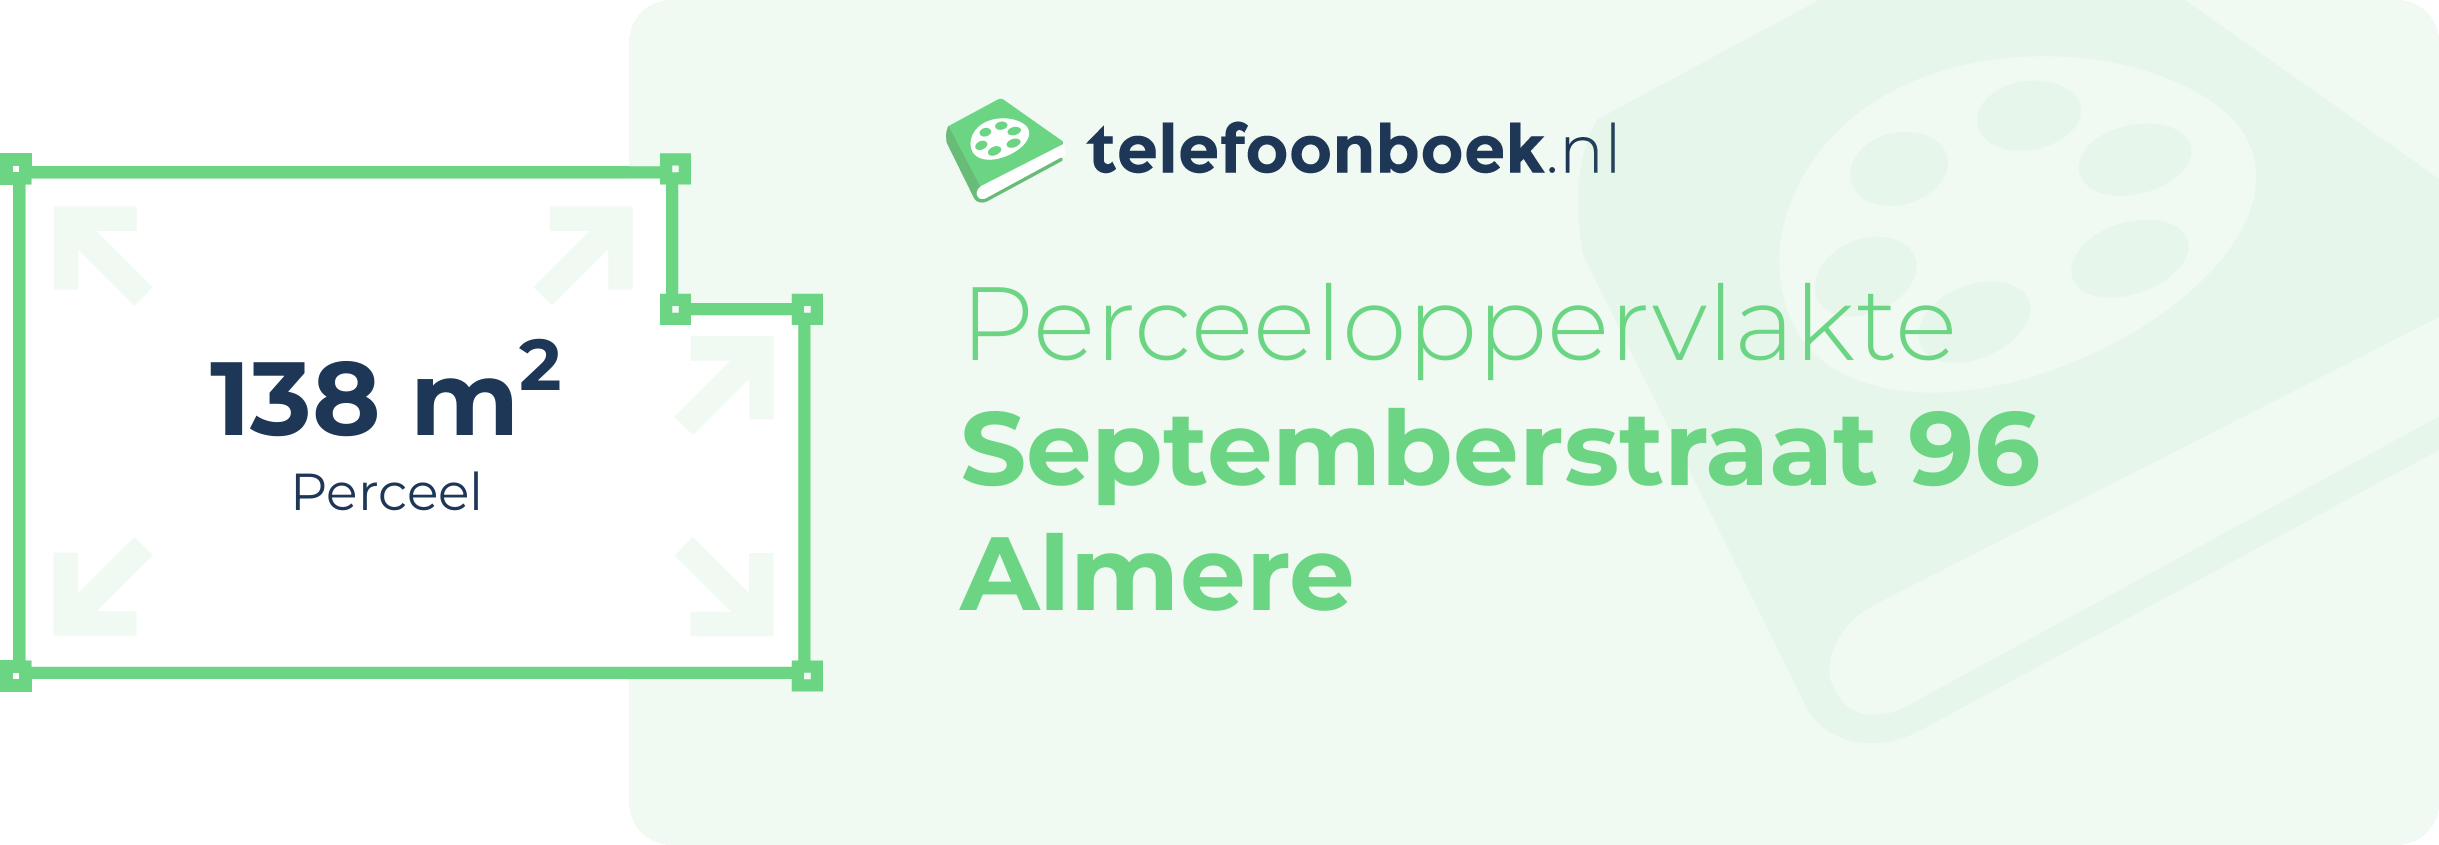 Perceeloppervlakte Septemberstraat 96 Almere